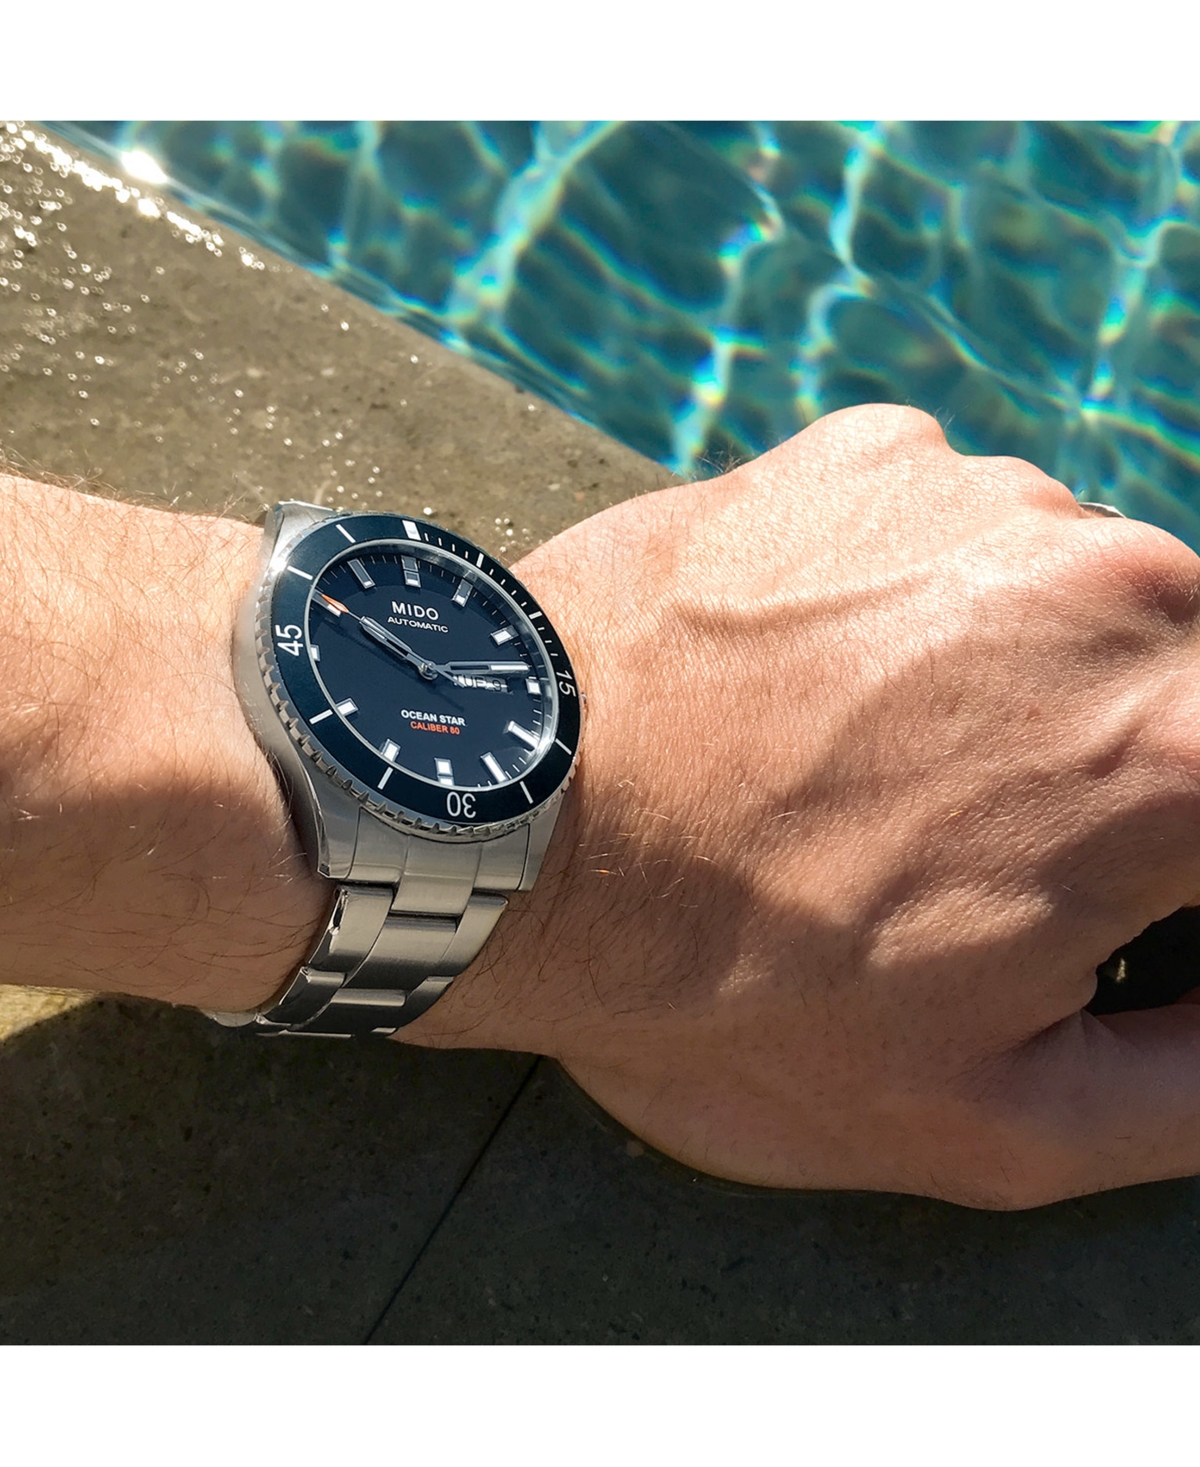 Shop Mido Men's Swiss Automatic Ocean Star Captain V Stainless Steel Bracelet Watch 42.5mm